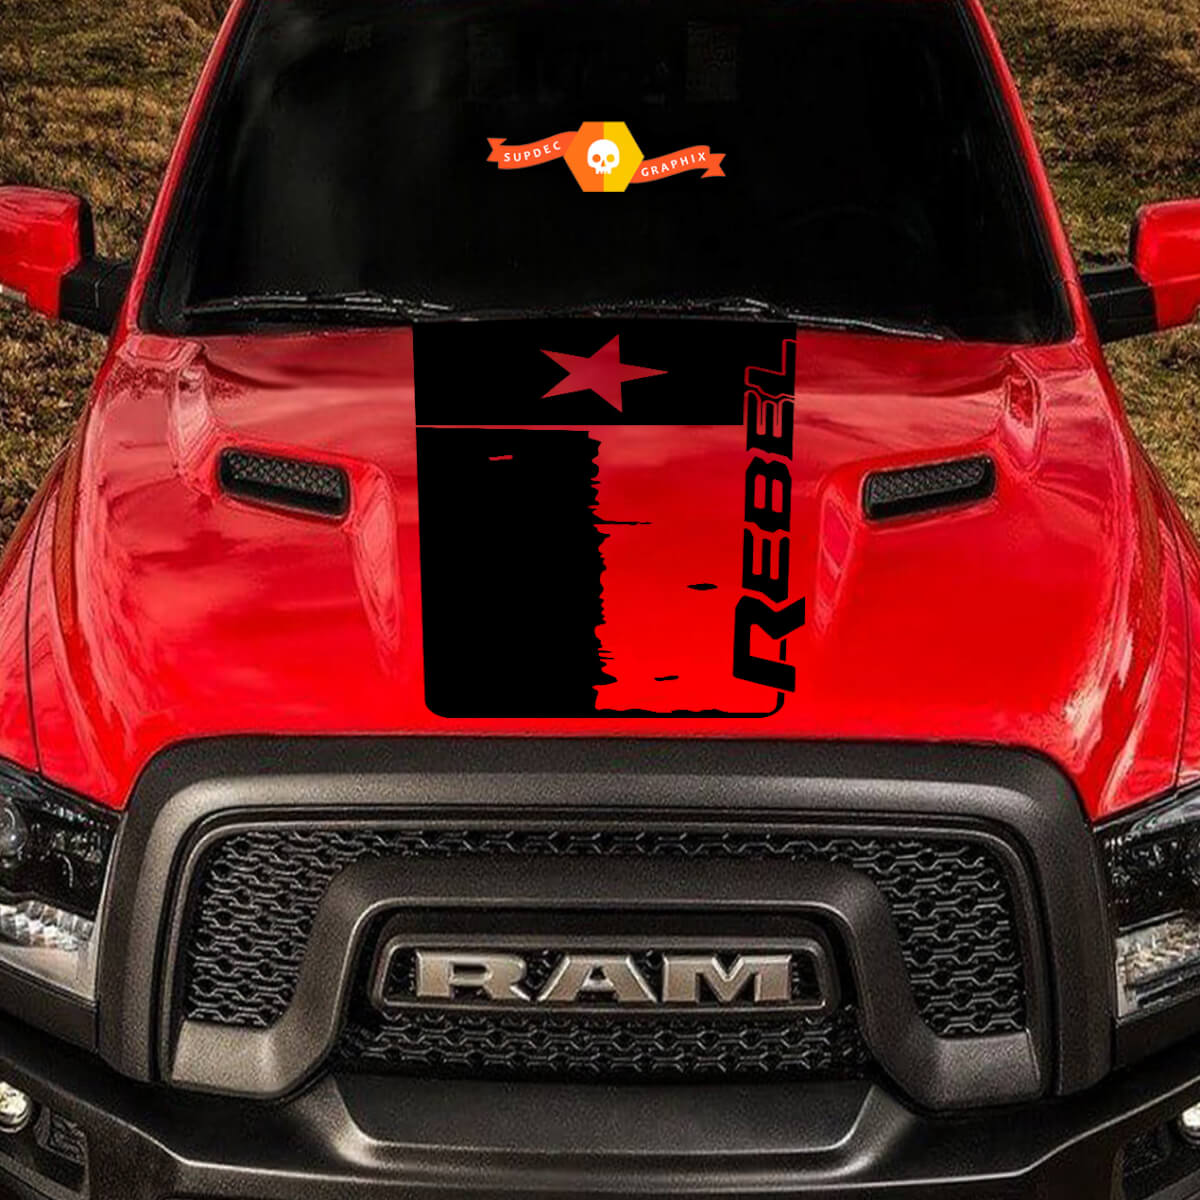 2015-17 Dodge Ram Rebel Distressed Texas Flag Hood Truck Vinyl Decal Graphic #2